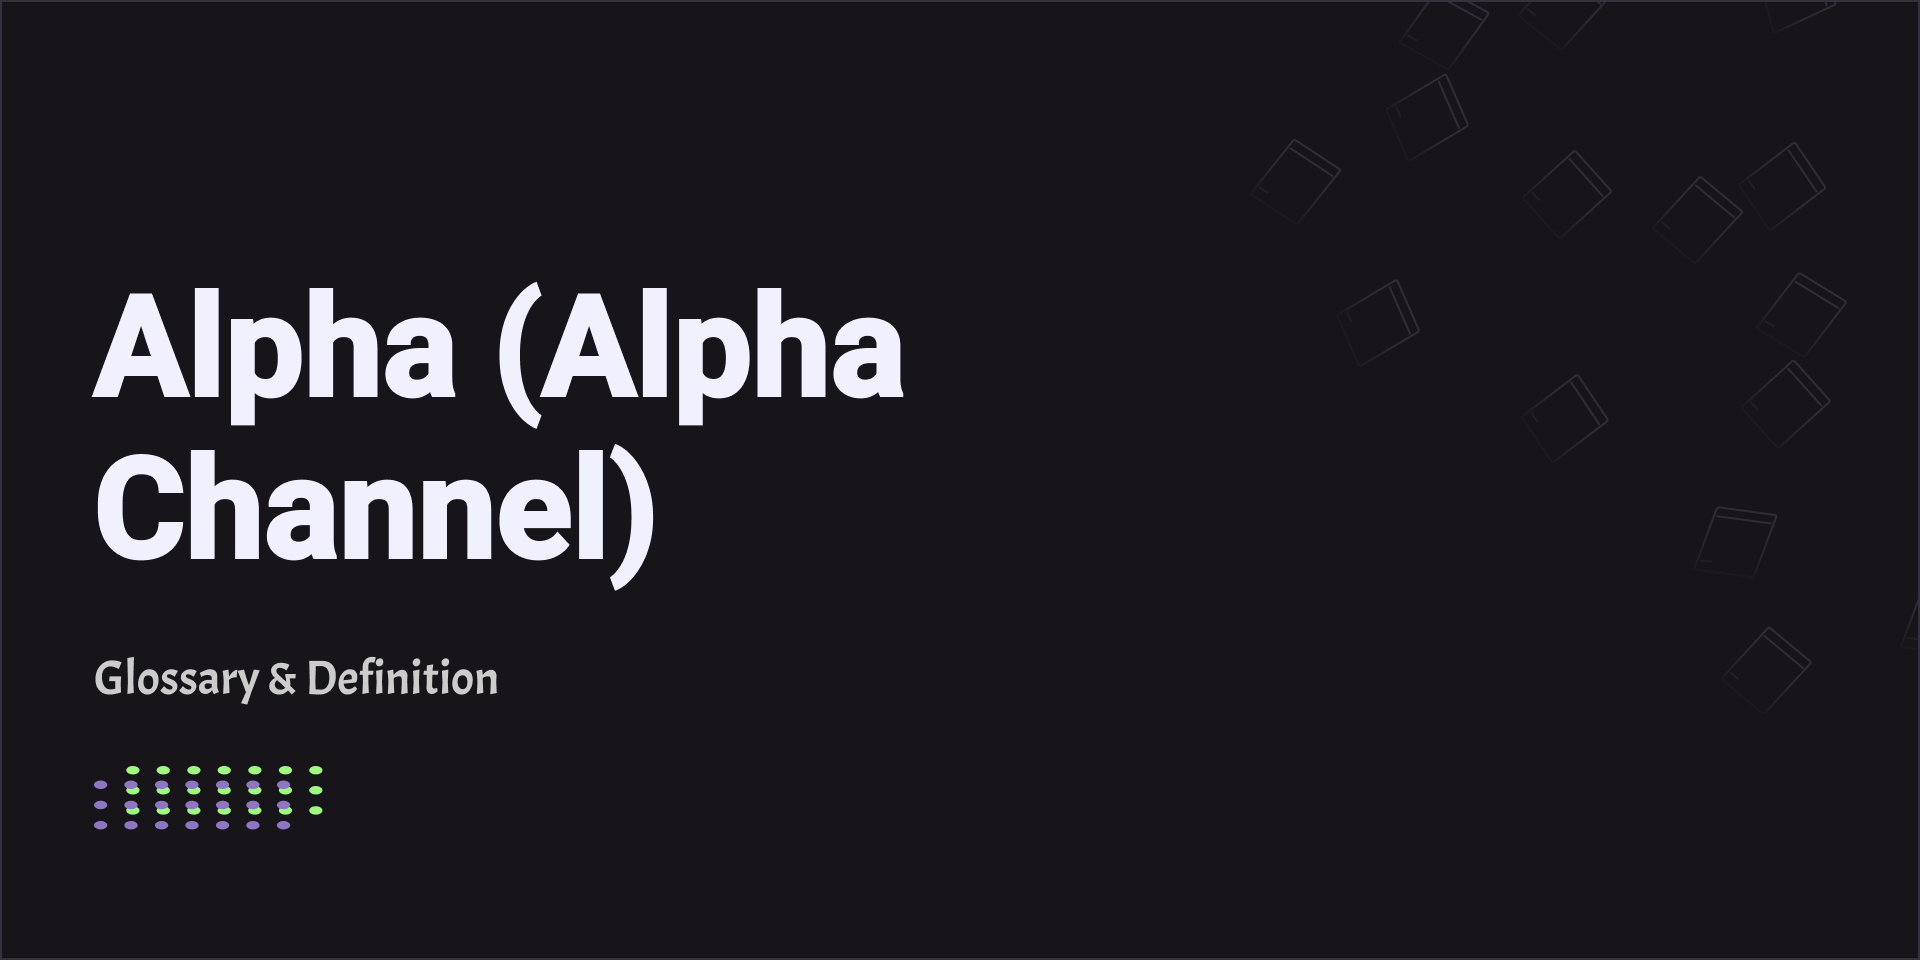 Alpha (Alpha Channel)